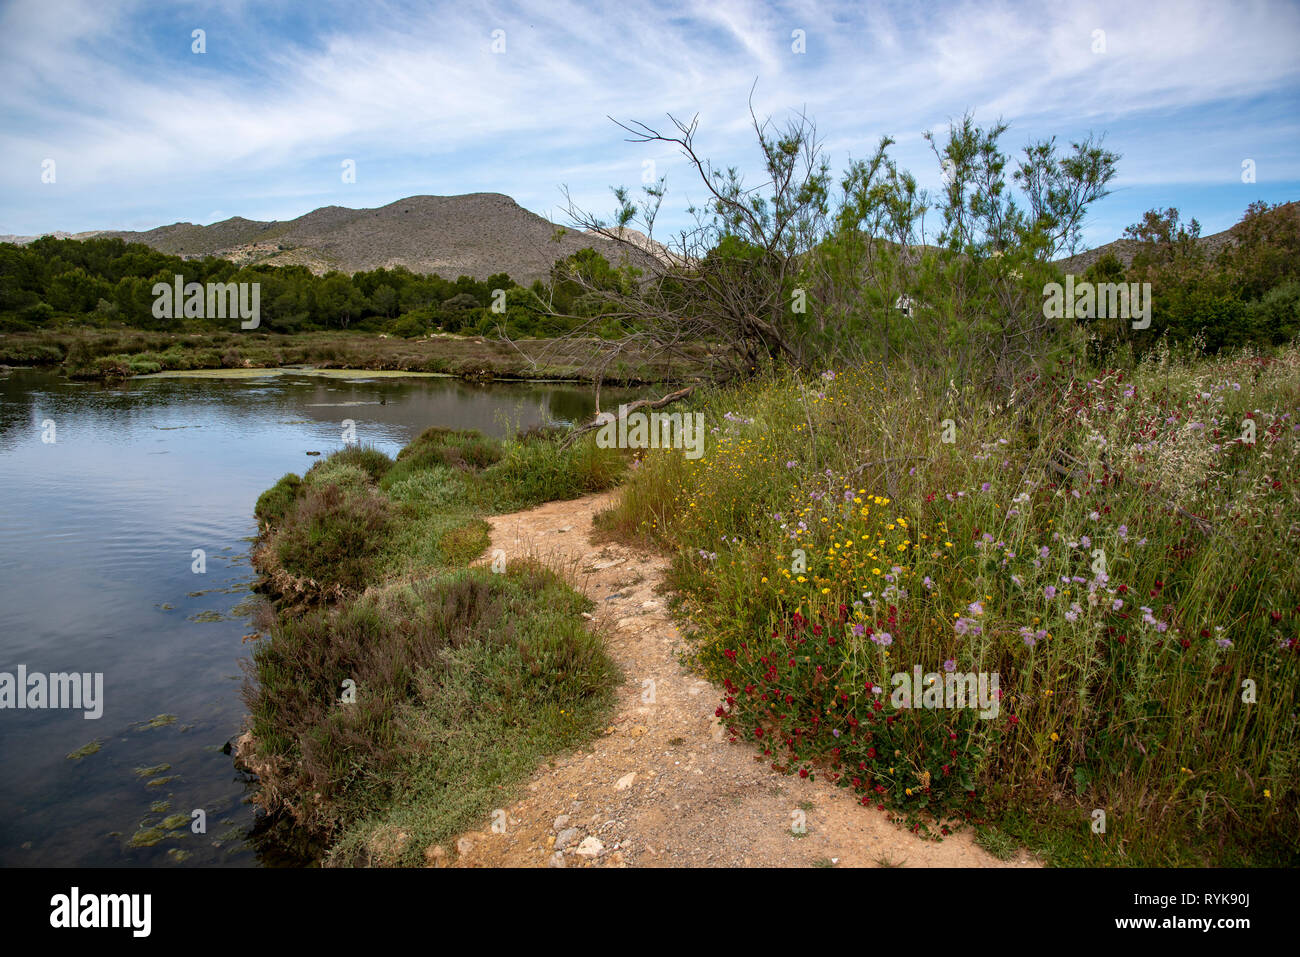 La Gola natural park,a small wetland centrally located in Puerto Pollenca town, Mojorca, Spain. Stock Photo